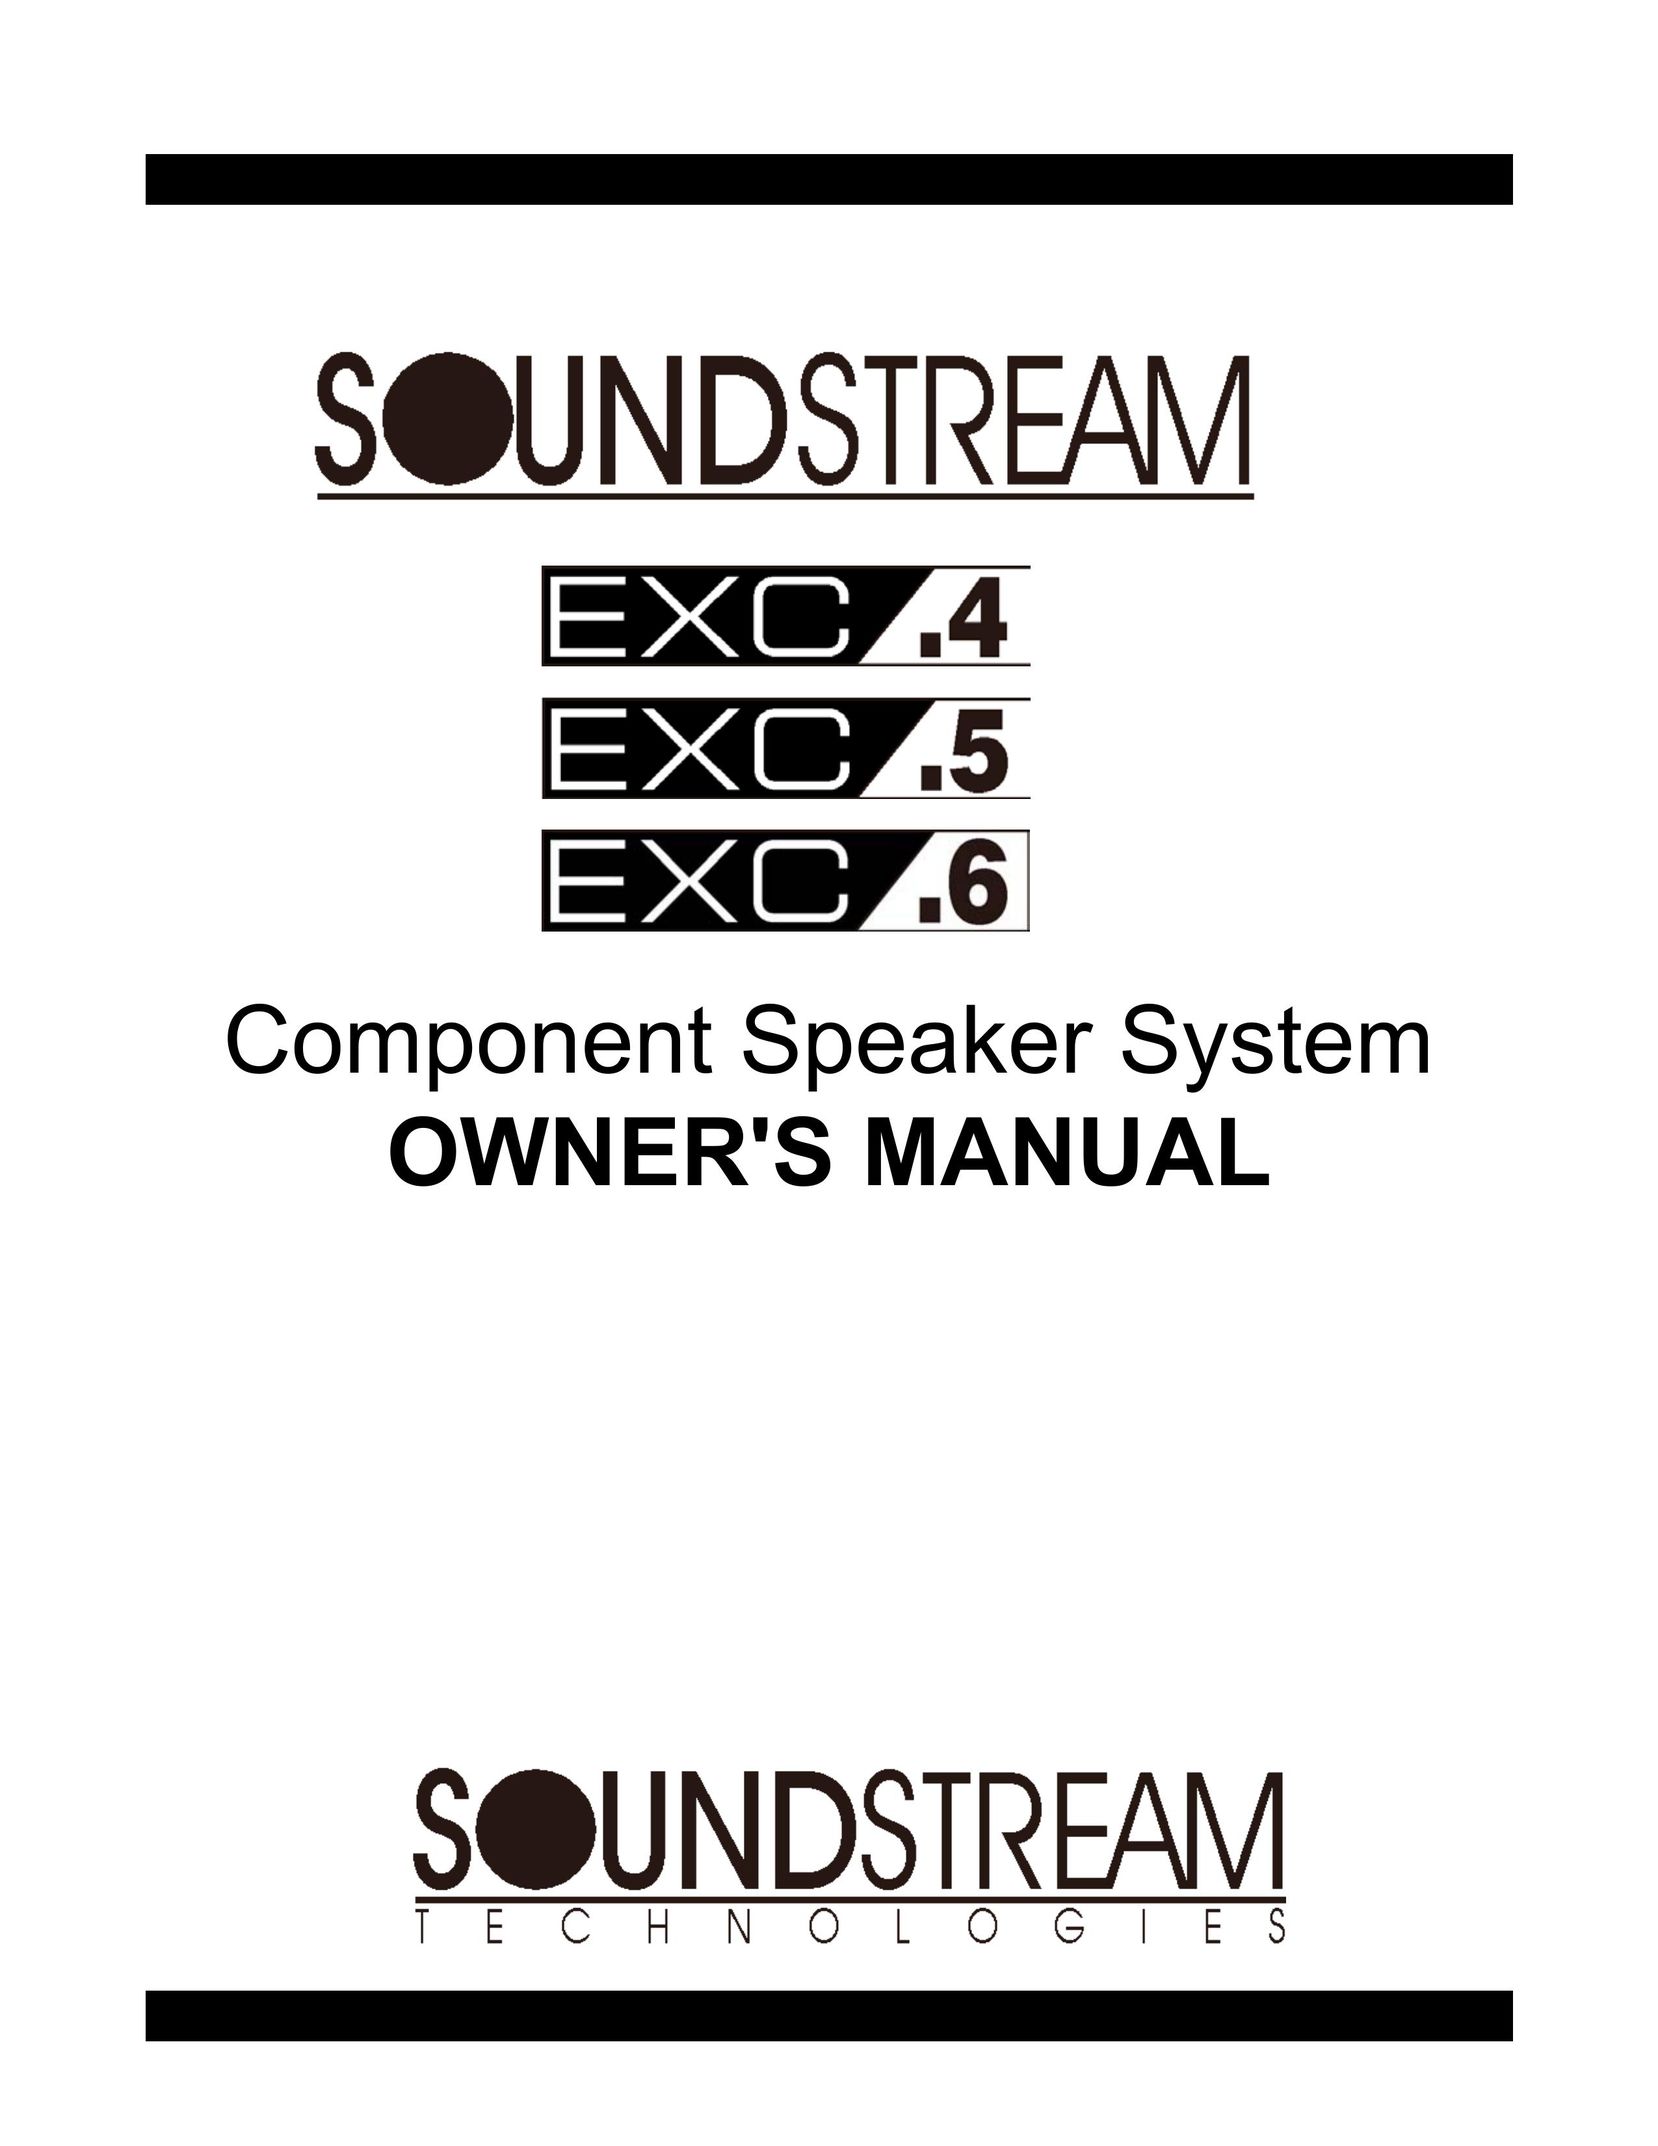 Soundstream Technologies EXC.6 Speaker System User Manual